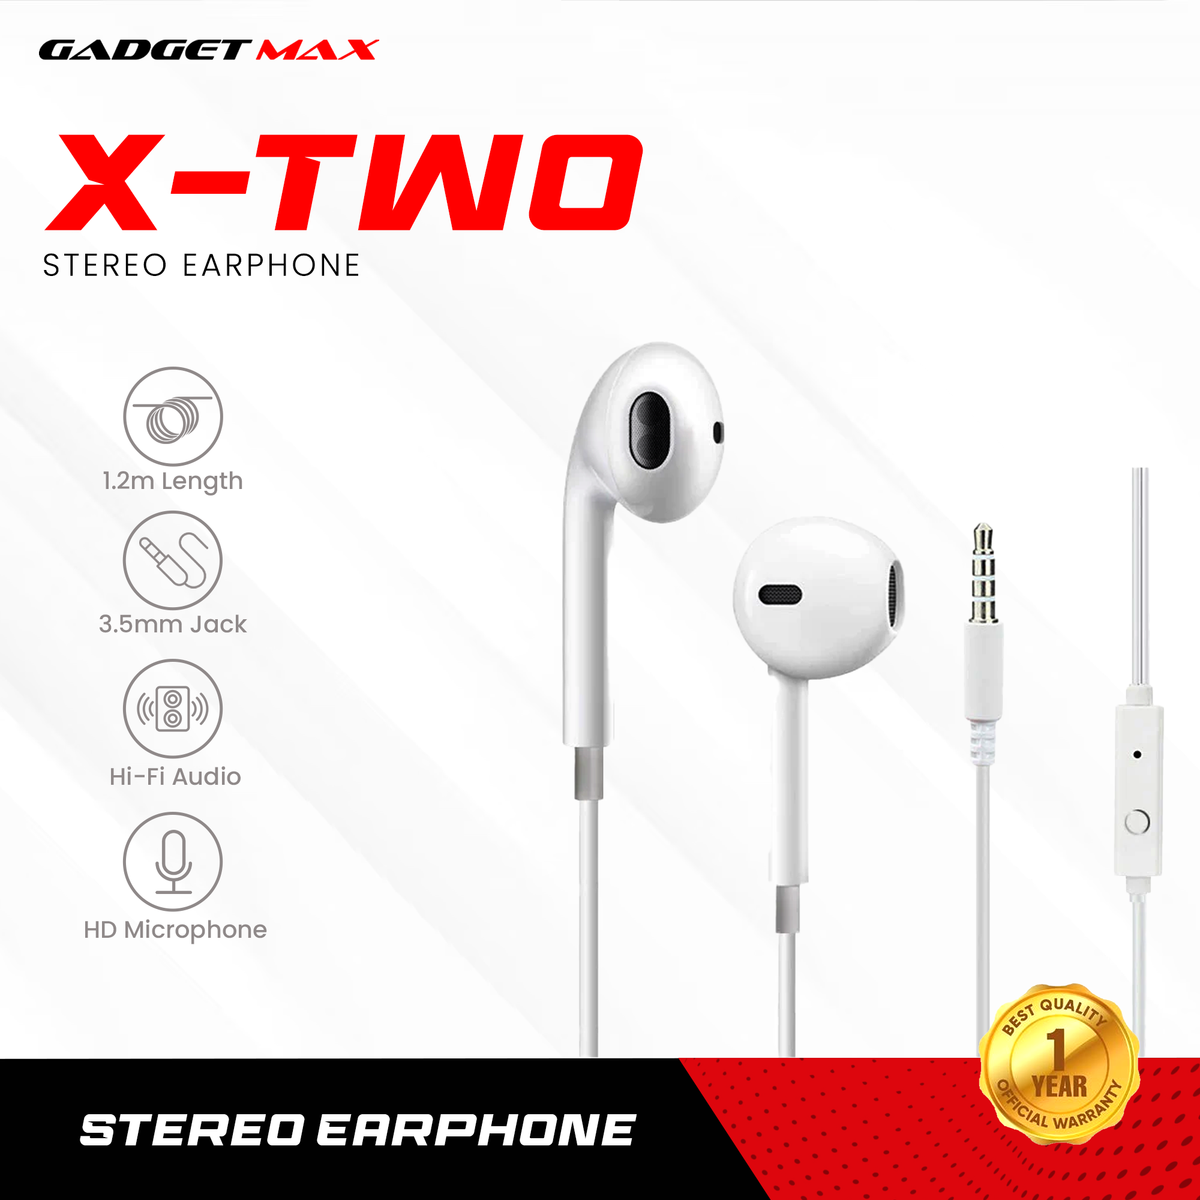 GADGET MAX  X-Two Stereo Earphone Sound Quality Earphone,  3.5mm Earphone